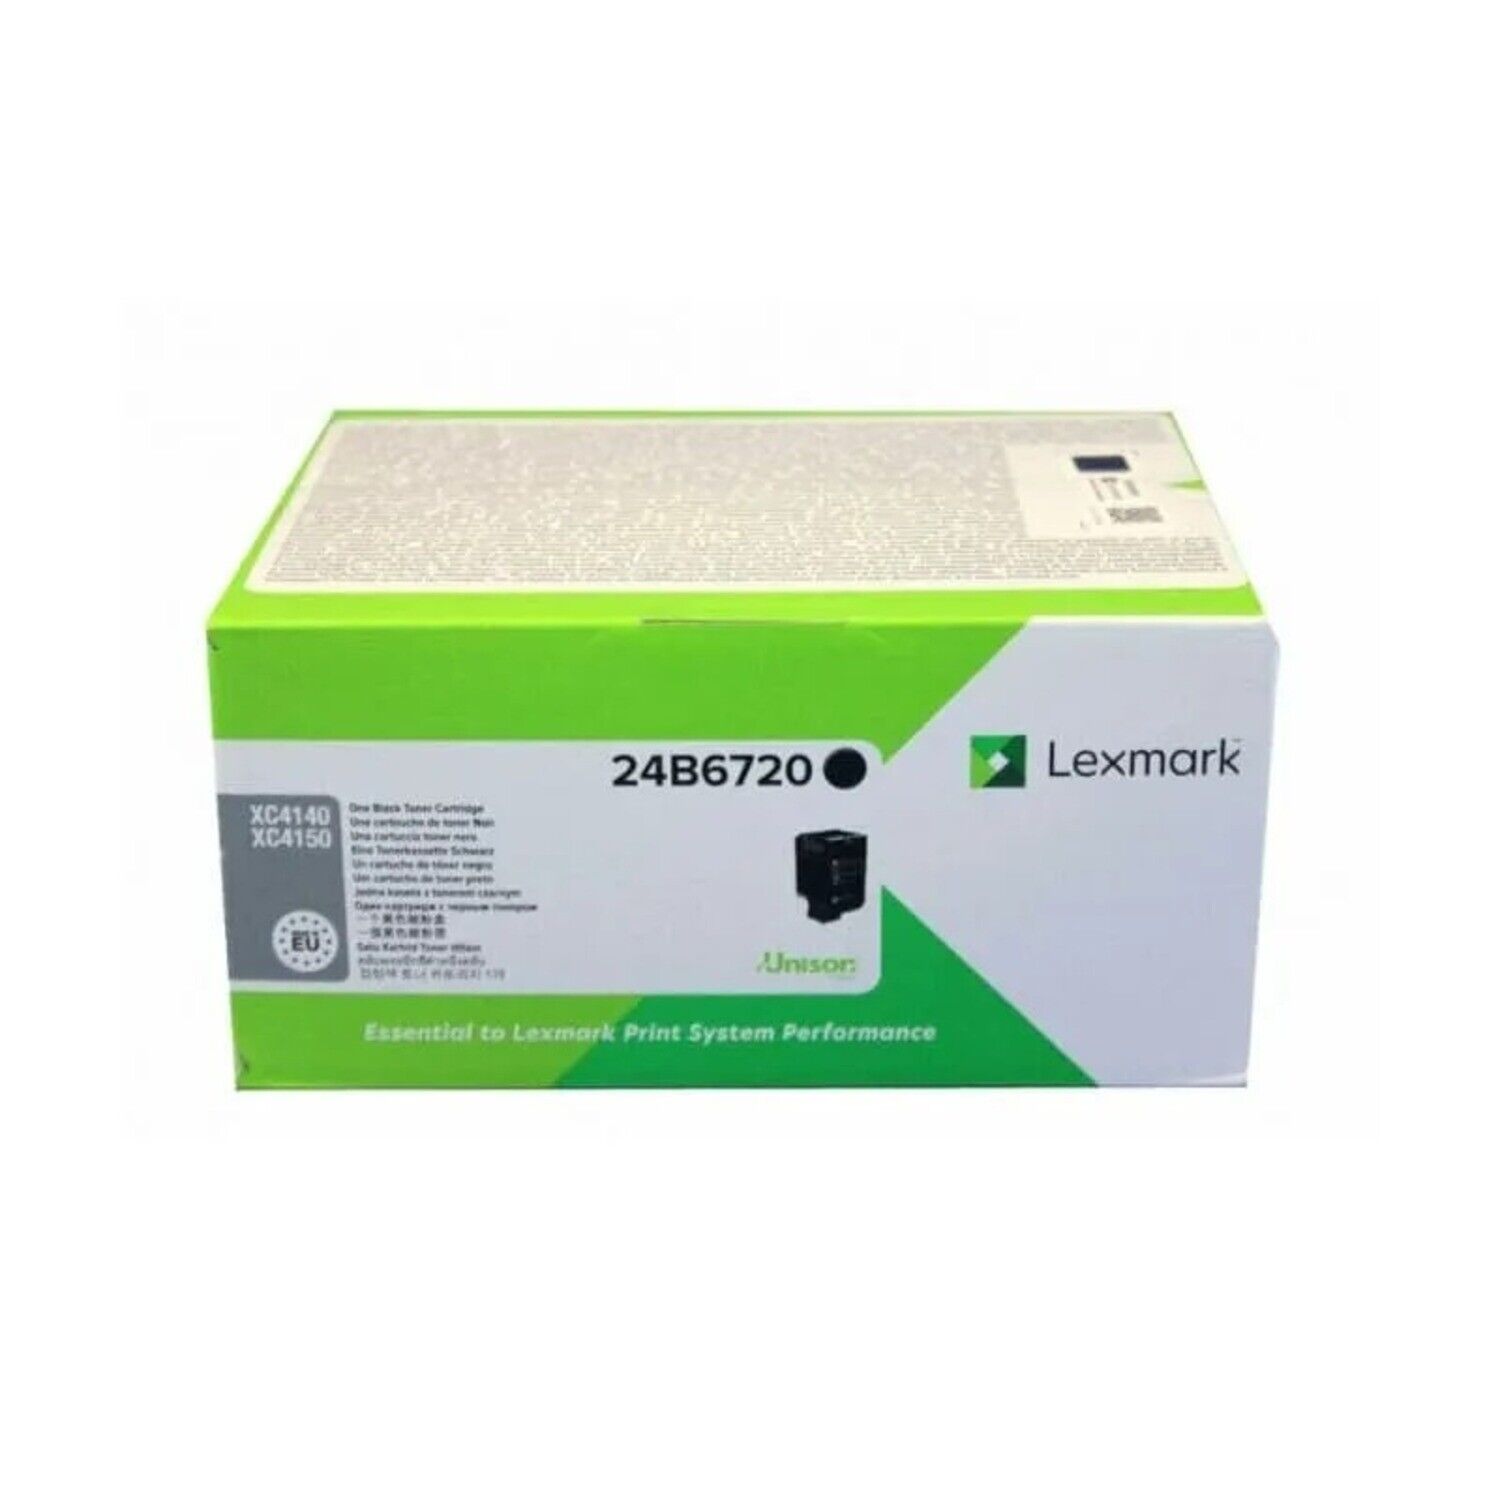 Genuine Lexmark 24B6720 XC4150 Toner Cartridge (Black) in Retail Packaging